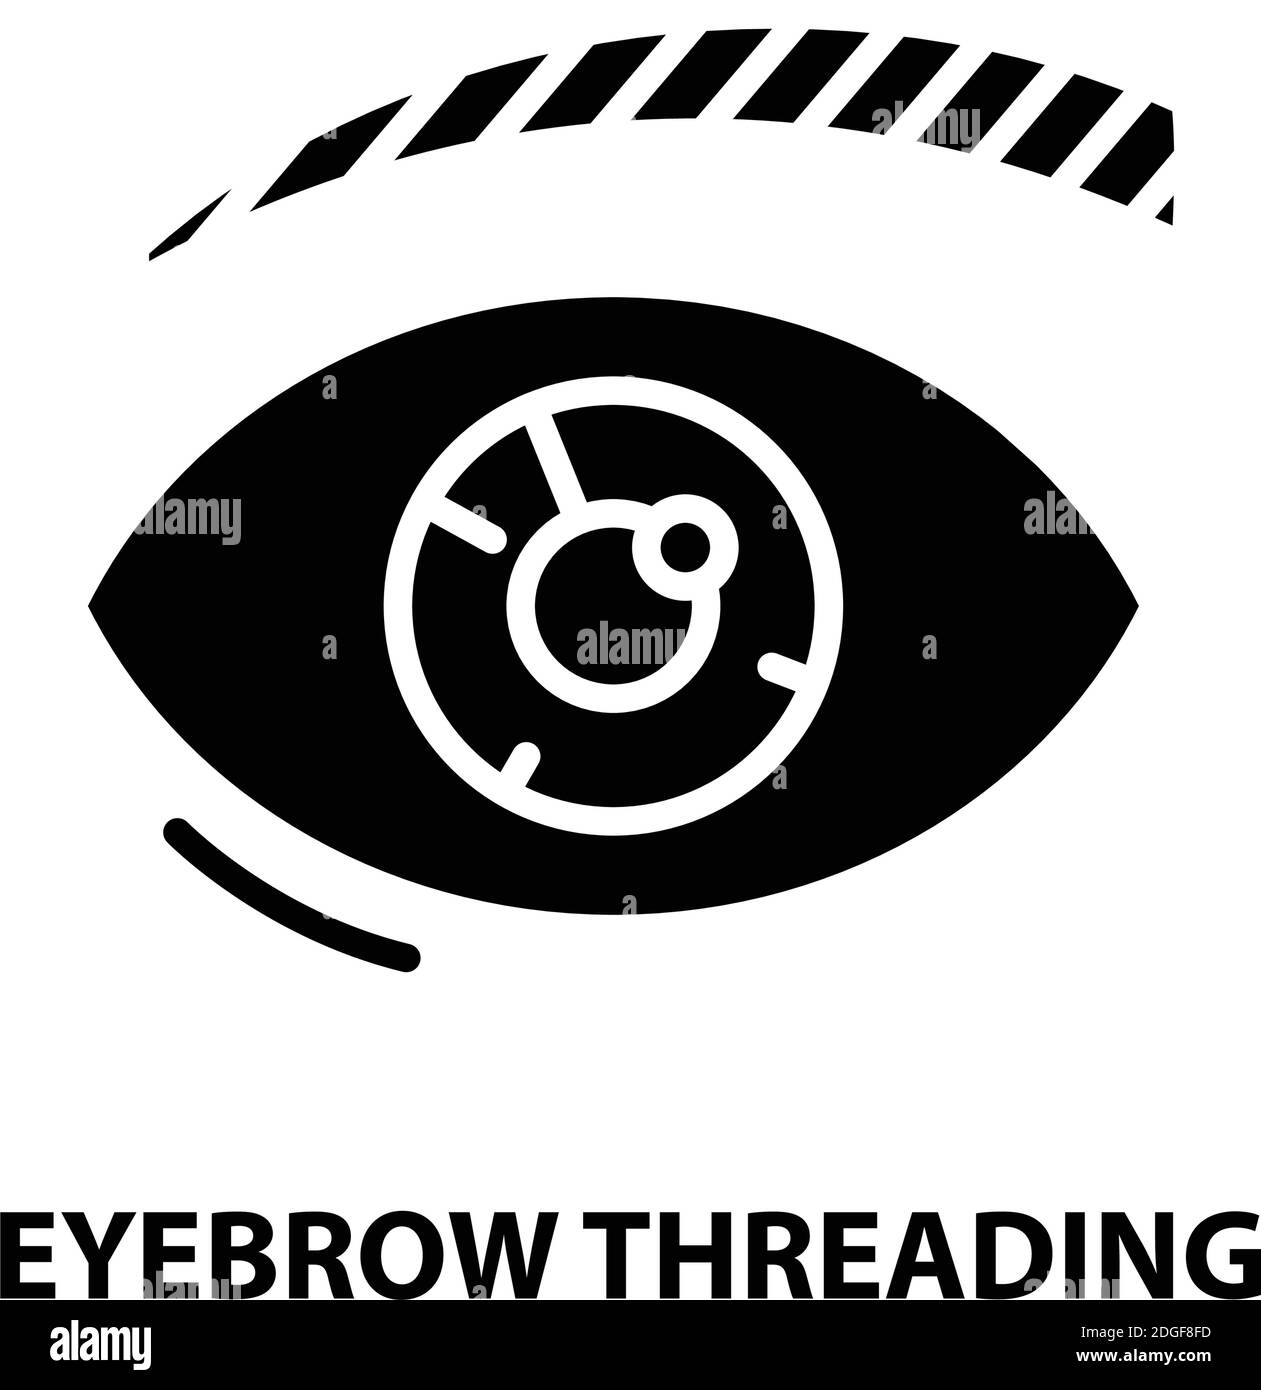 eyebrow threading icon, black vector sign with editable strokes, concept illustration Stock Vector